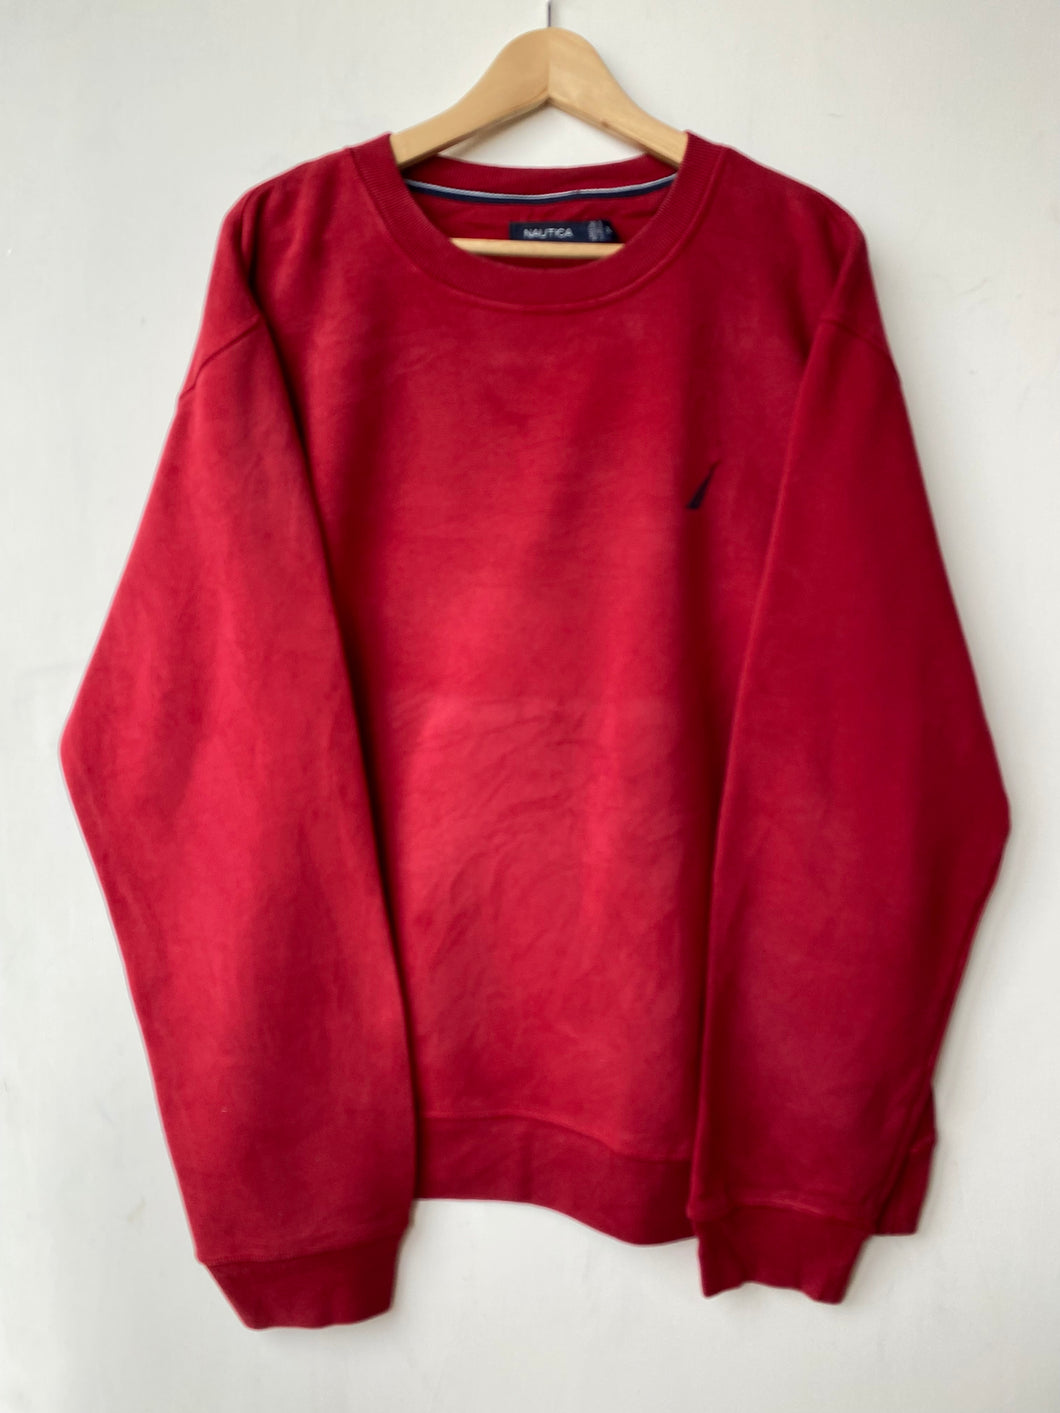 Nautica sweatshirt (XL)